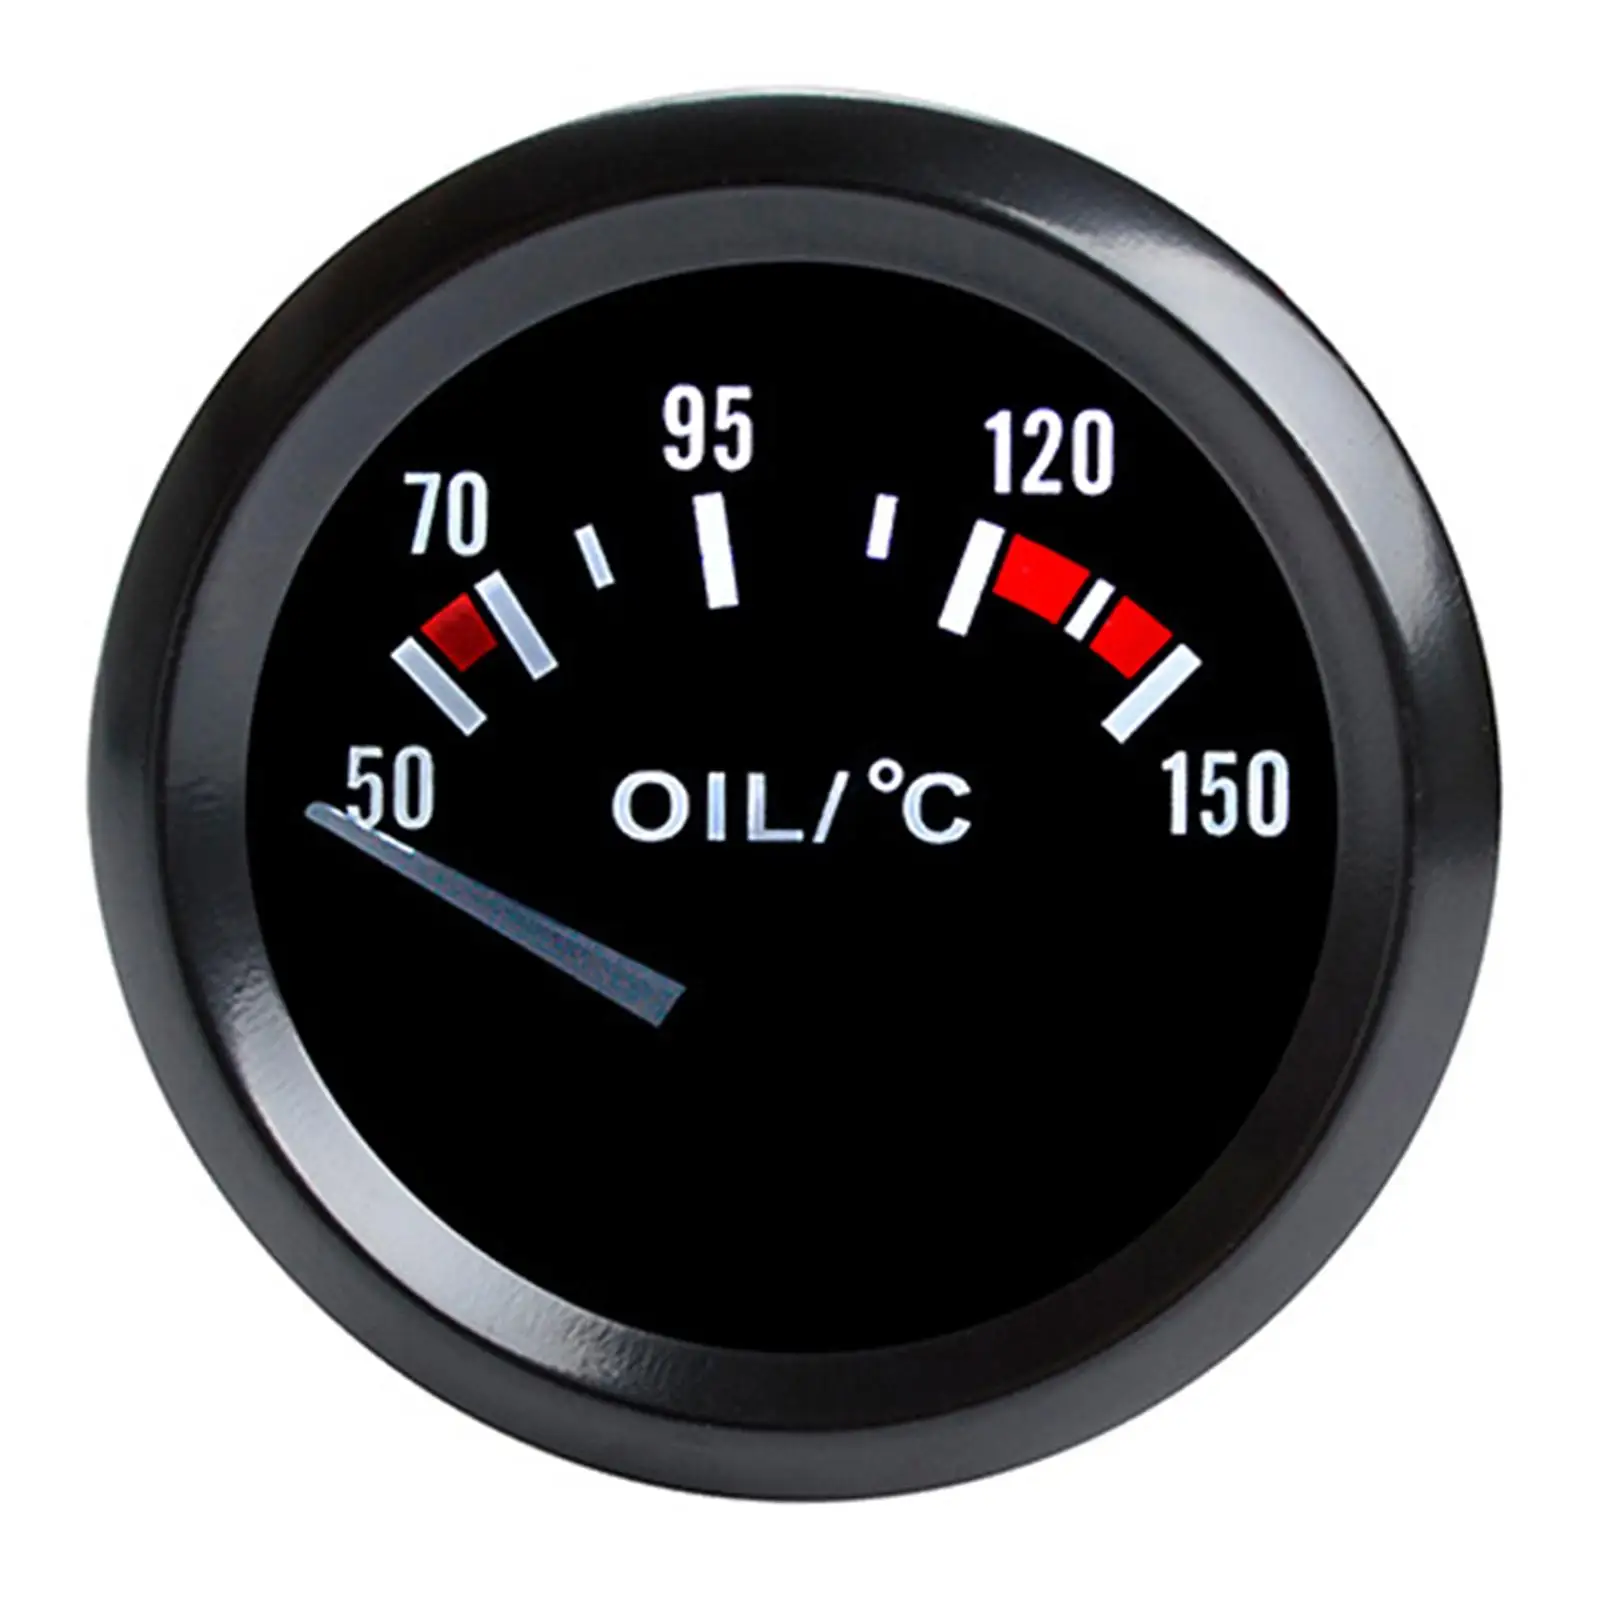 Oil Temp Gauge High Performance Durable Car Accessories 2 inch Oil Temperature Gauge Car Oil Temp Gauge Meter for Vehicle